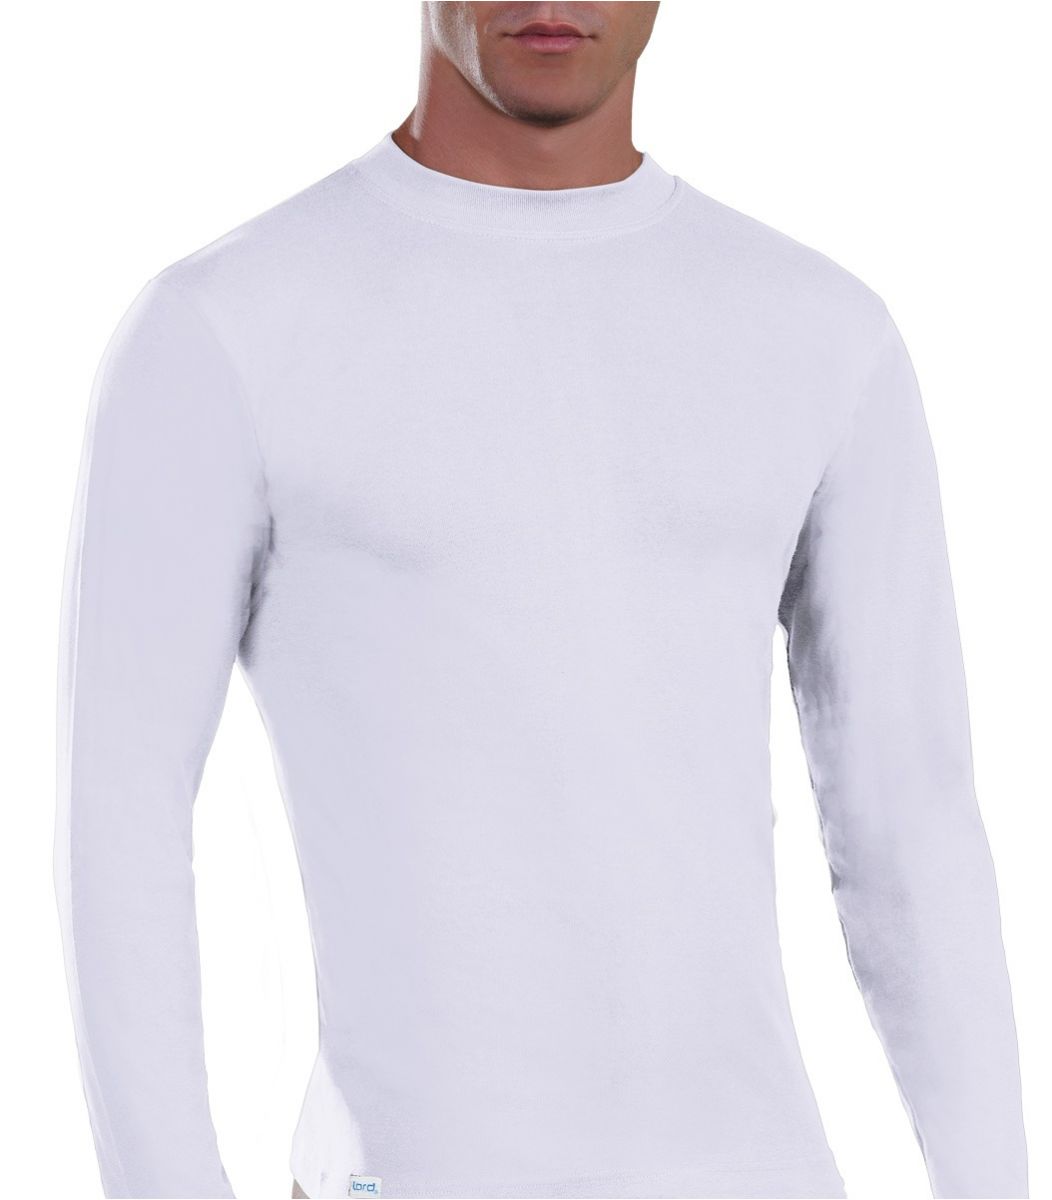 Men underwear Long Sleeve crew neck Color White Size XS